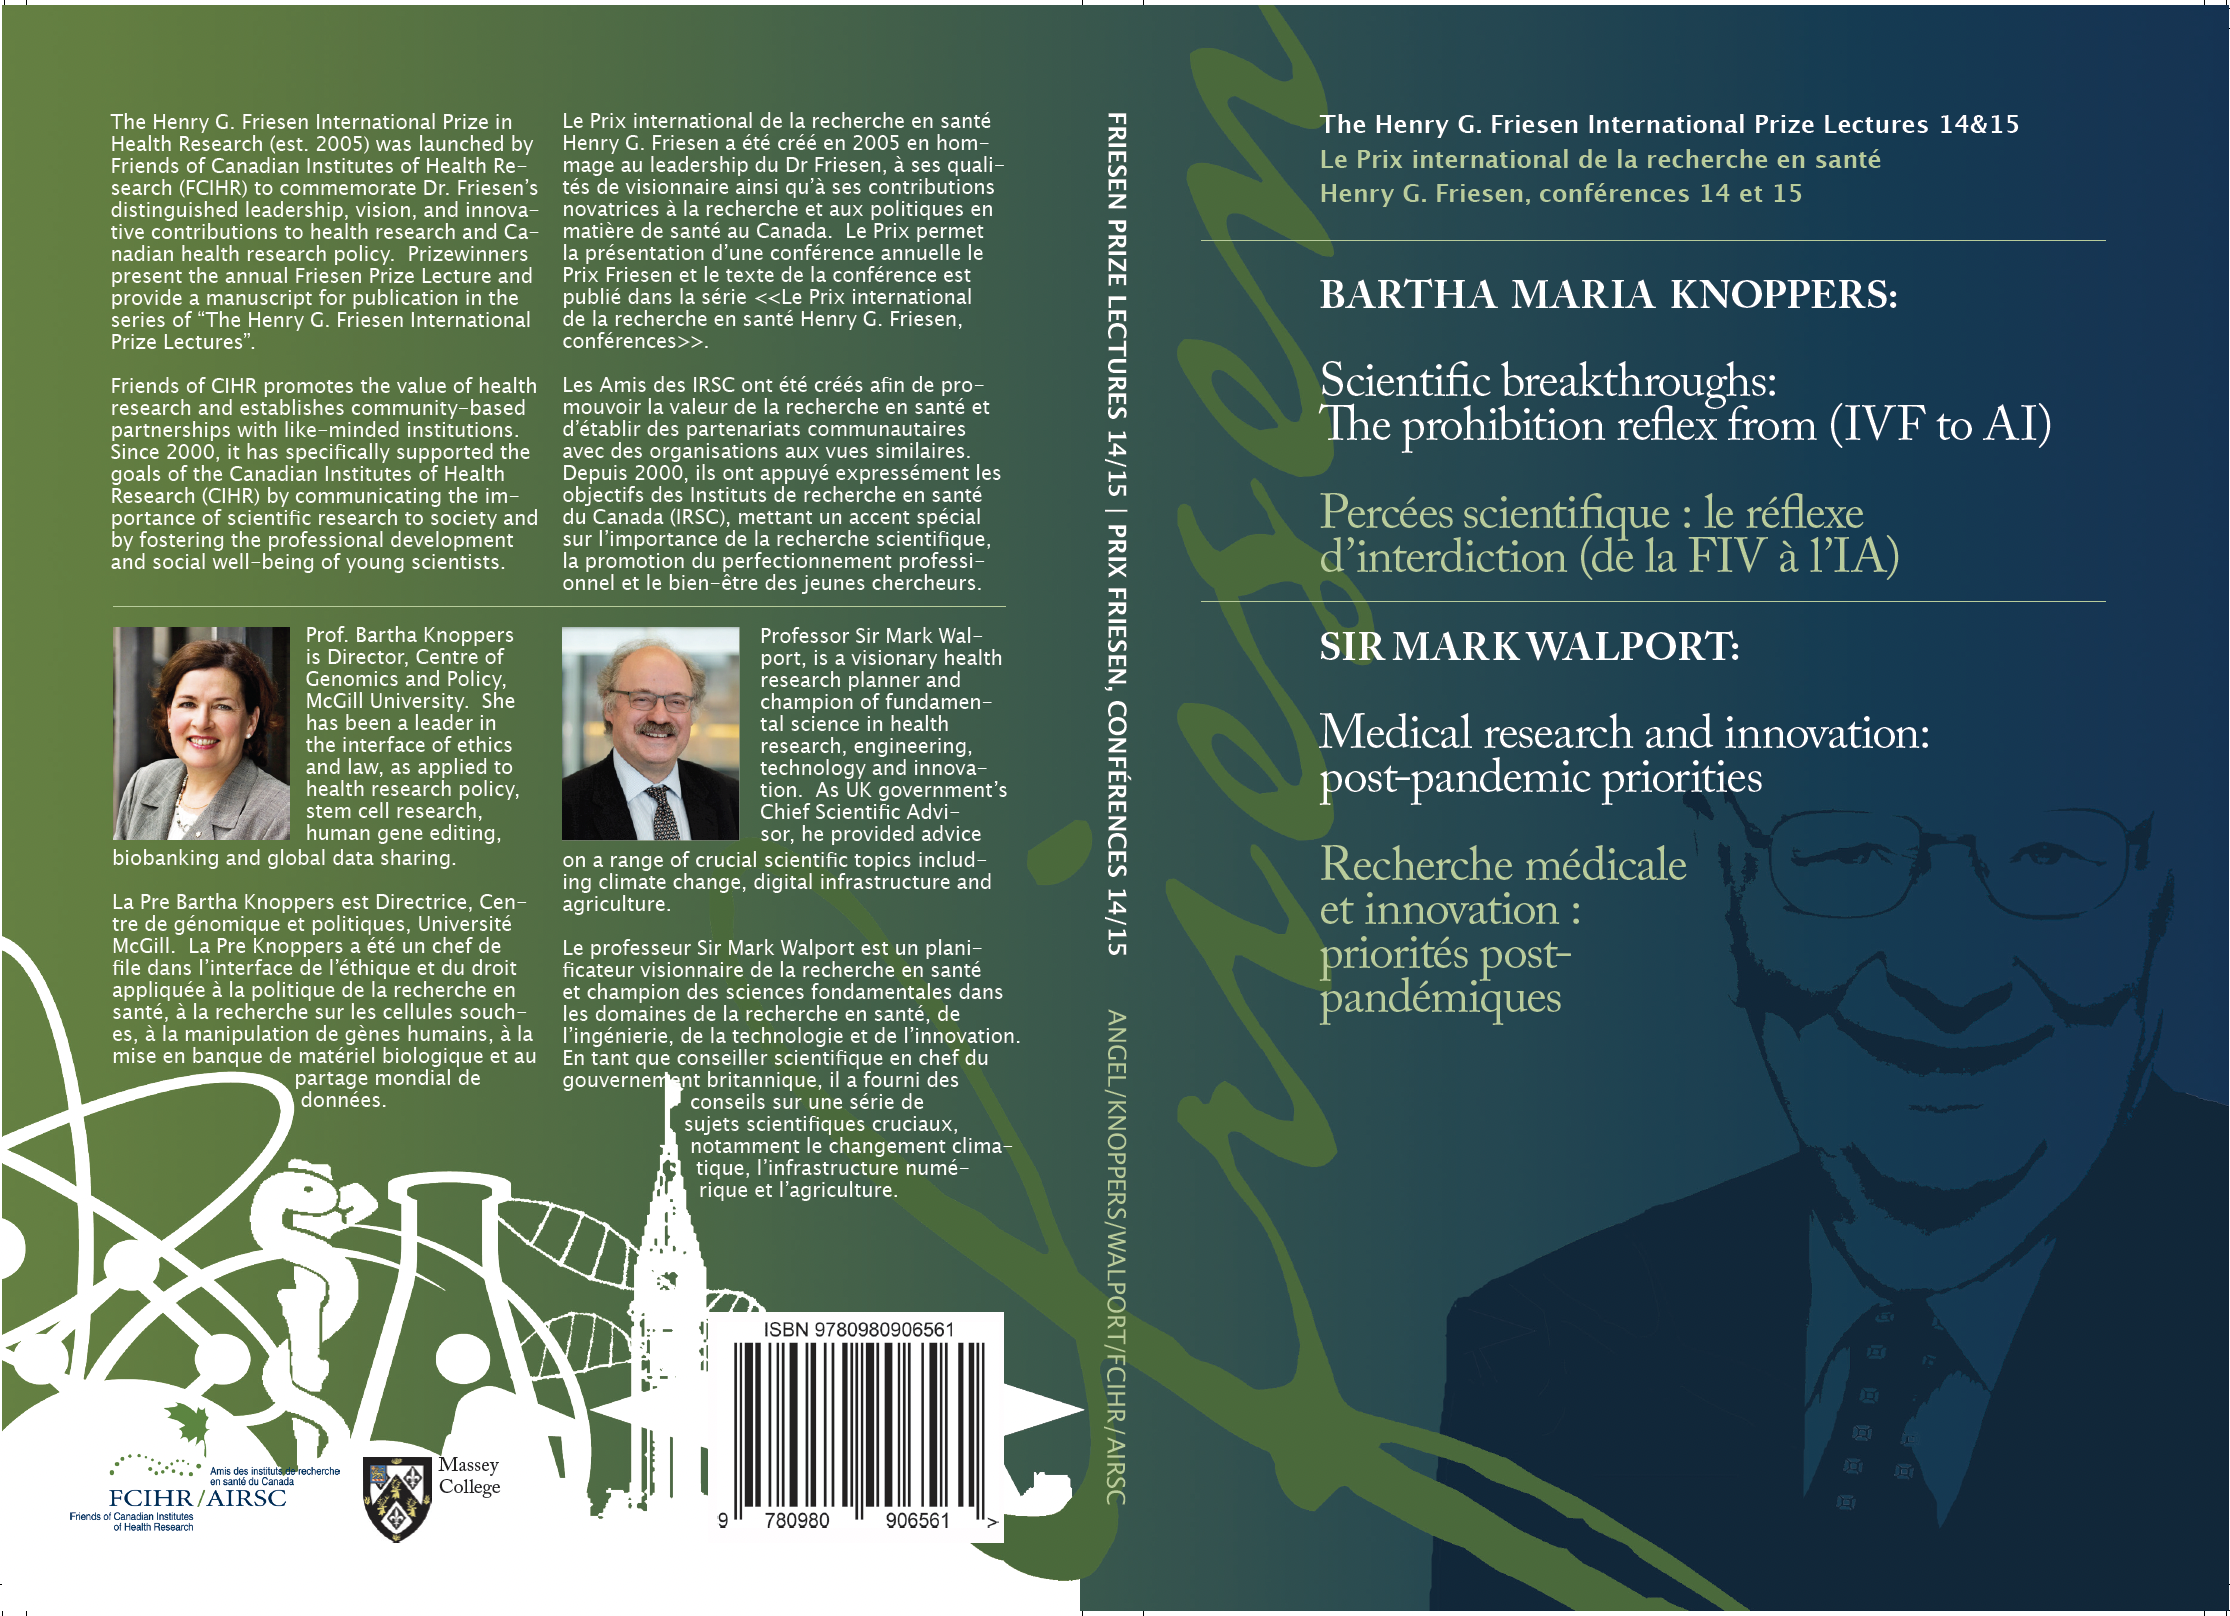 Book #7 - Friesen Lectures - Prof. Bartha Knoppers & Sir Mark Walport